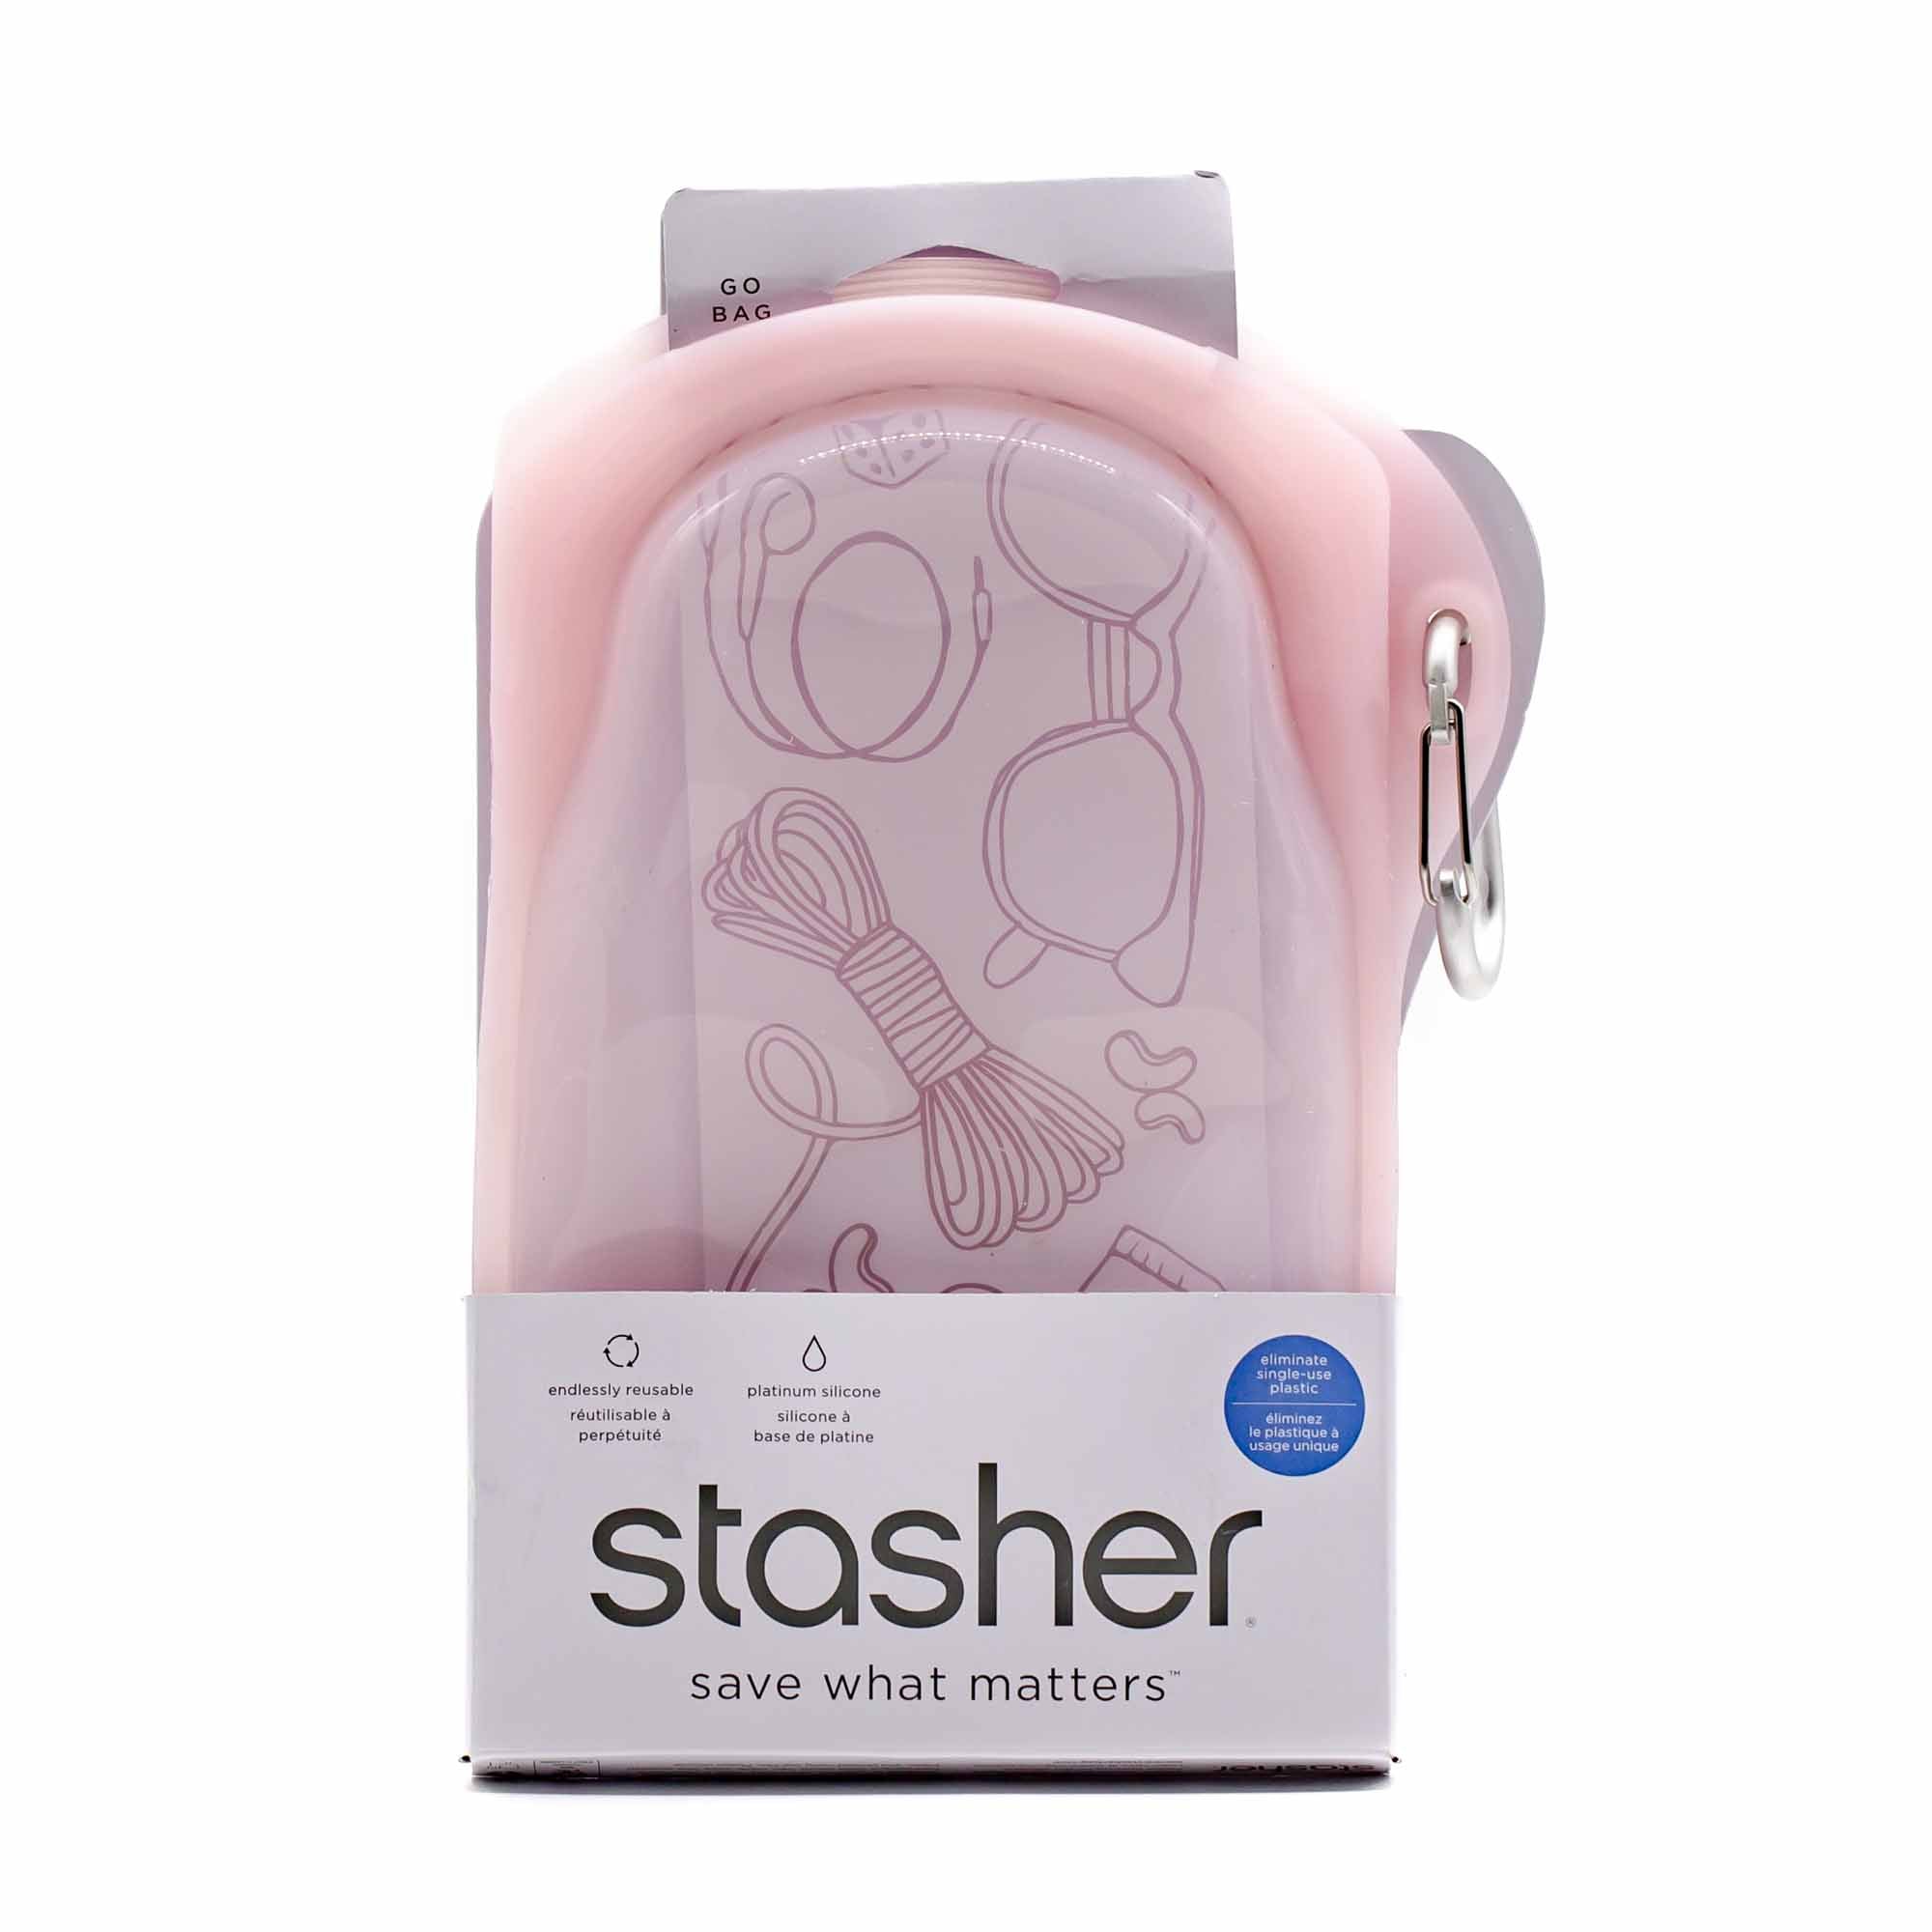 Stasher GO Reusable Clip On-Bag - Mortise And Tenon